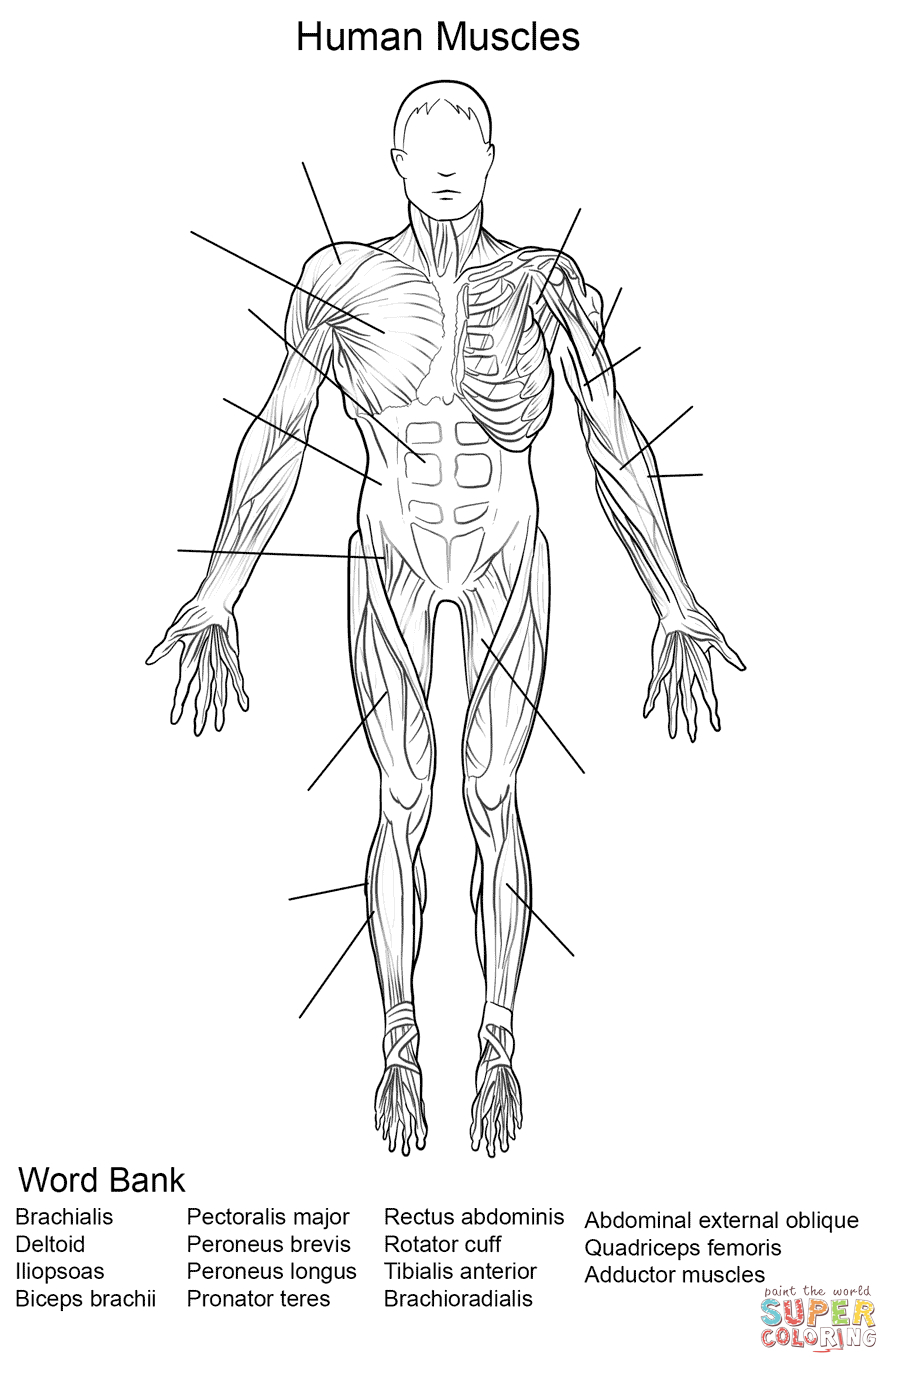 Human Muscles Front View Worksheet Coloring Page | Free Printable | Free Printable Human Anatomy Worksheets